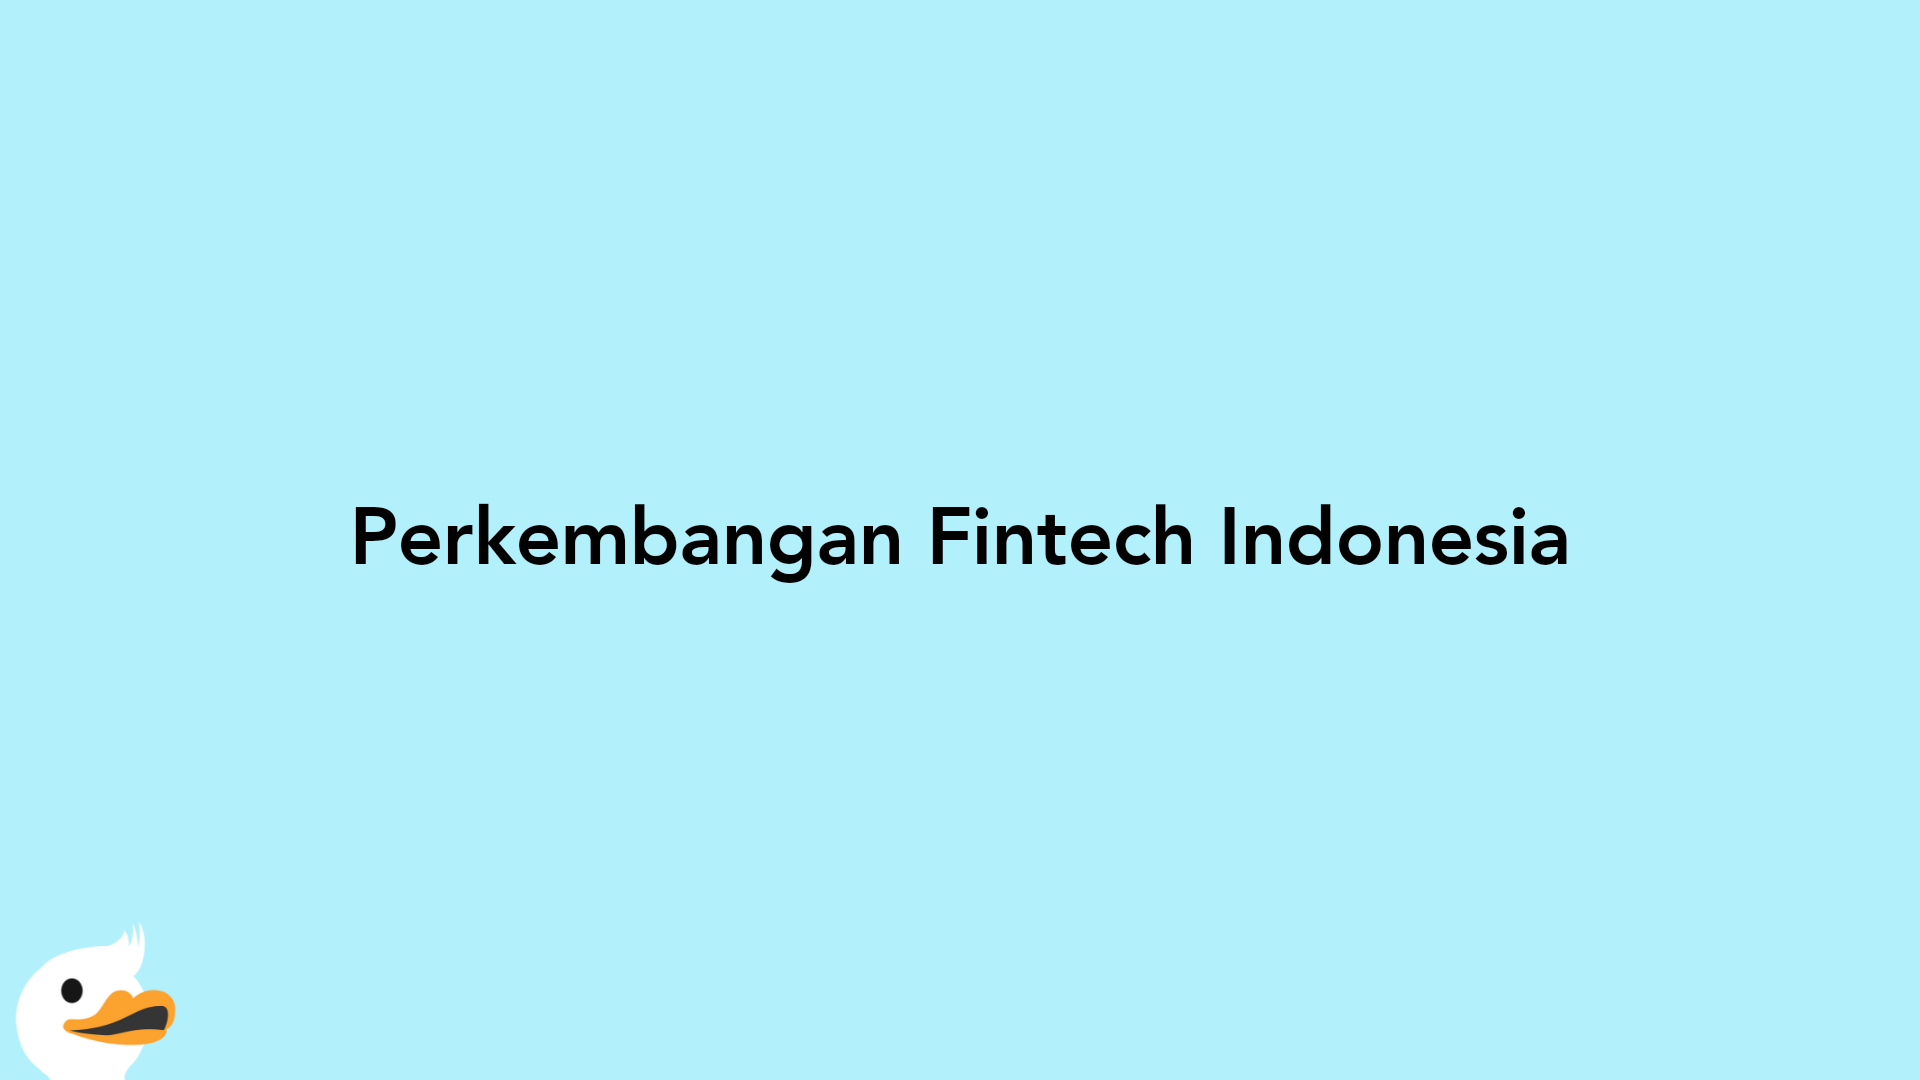 Perkembangan Fintech Indonesia